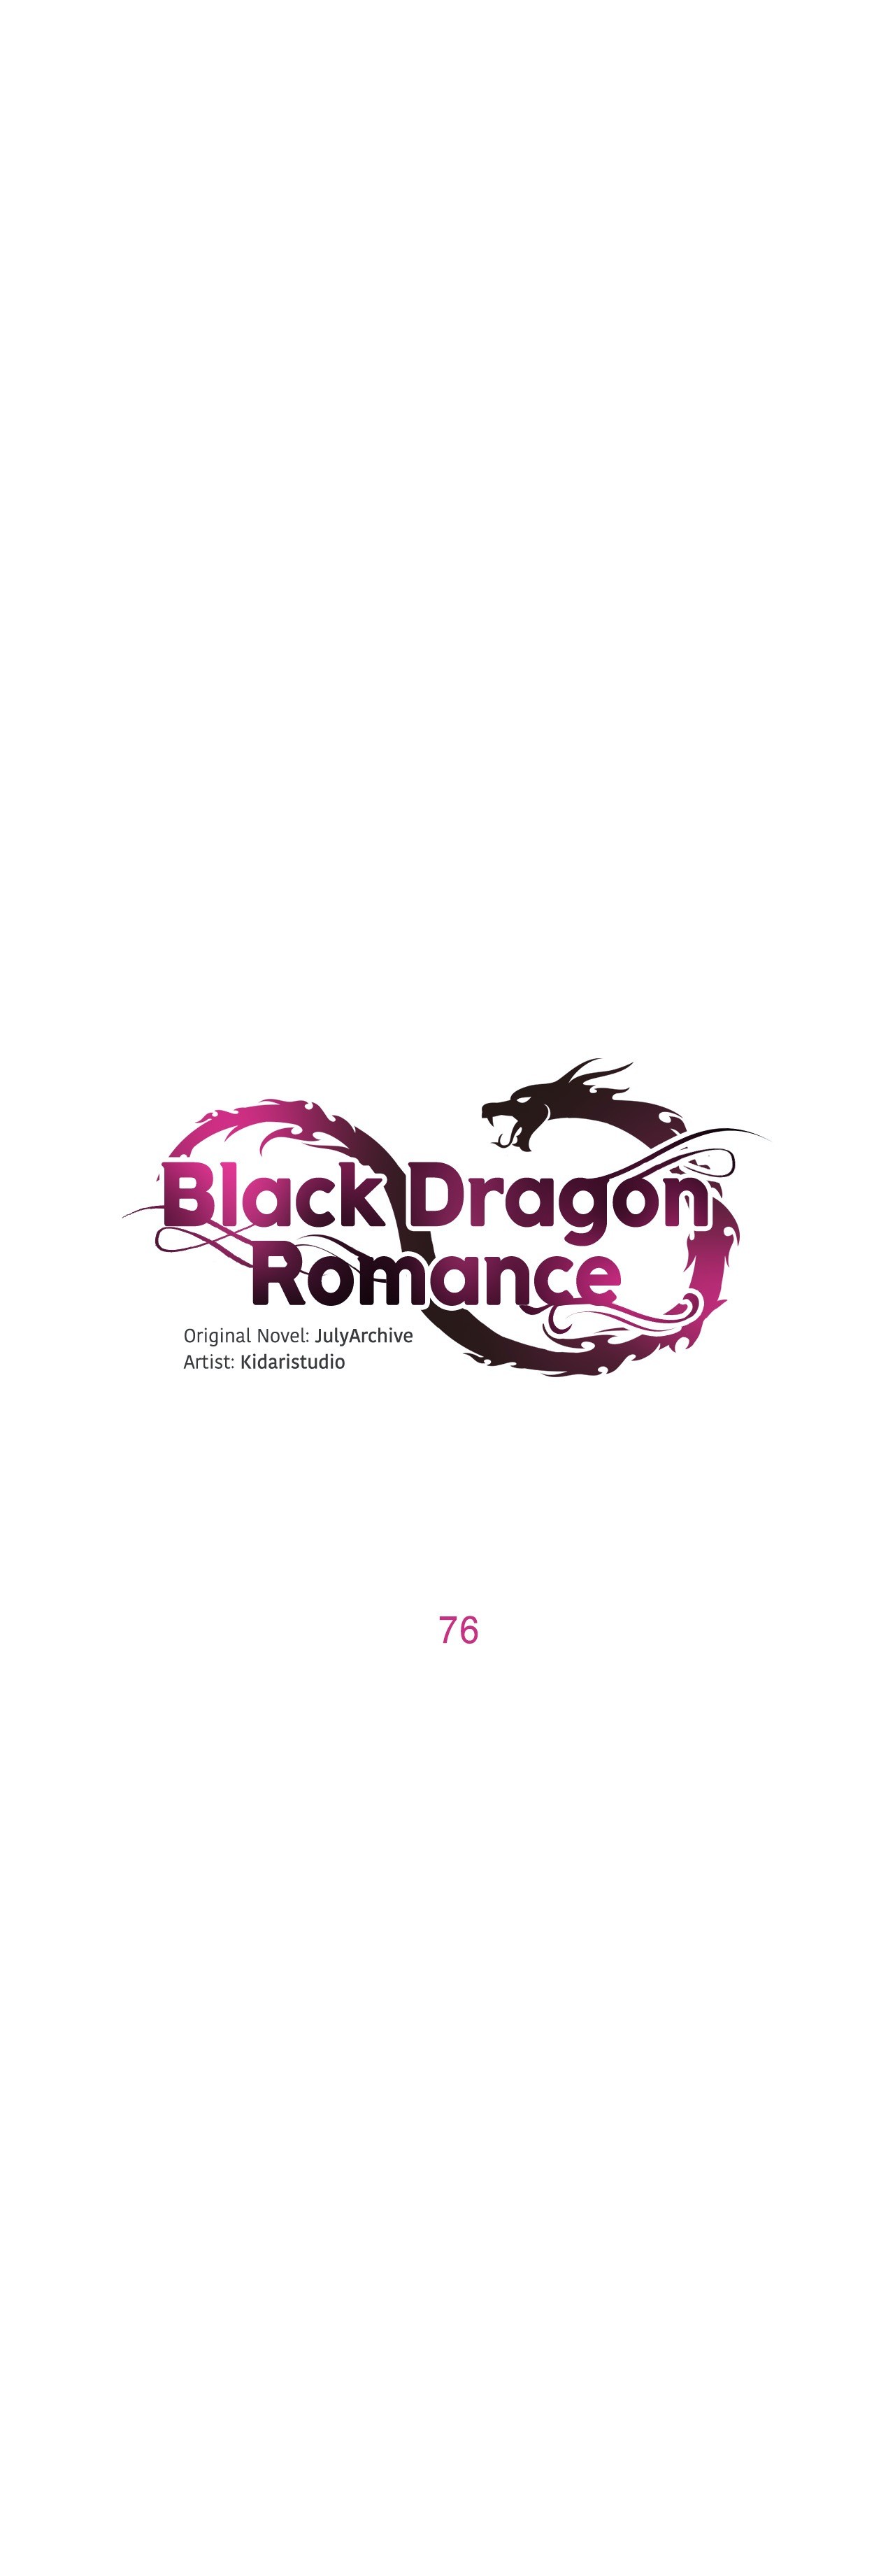 Black Dragon Romance image